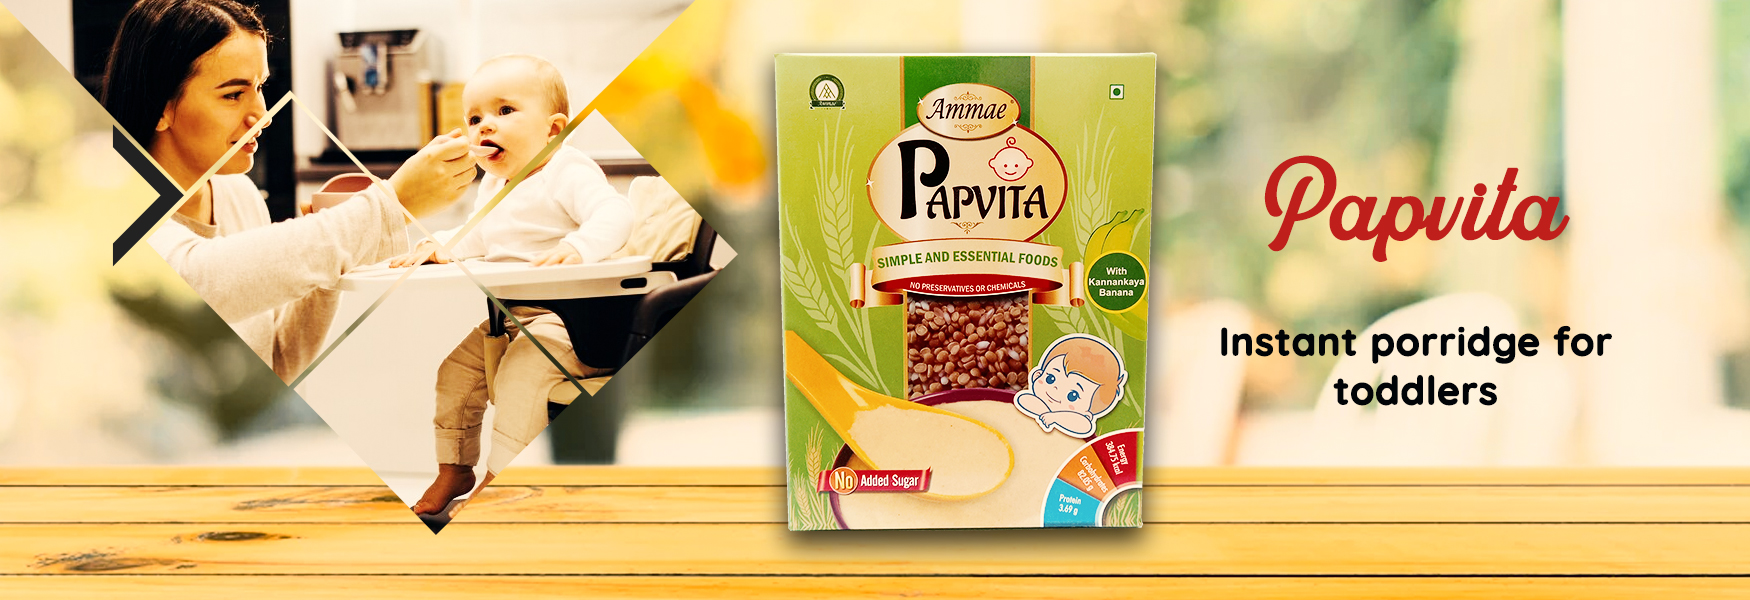 Ammae Papvita | Papvita - Ammae Foods India